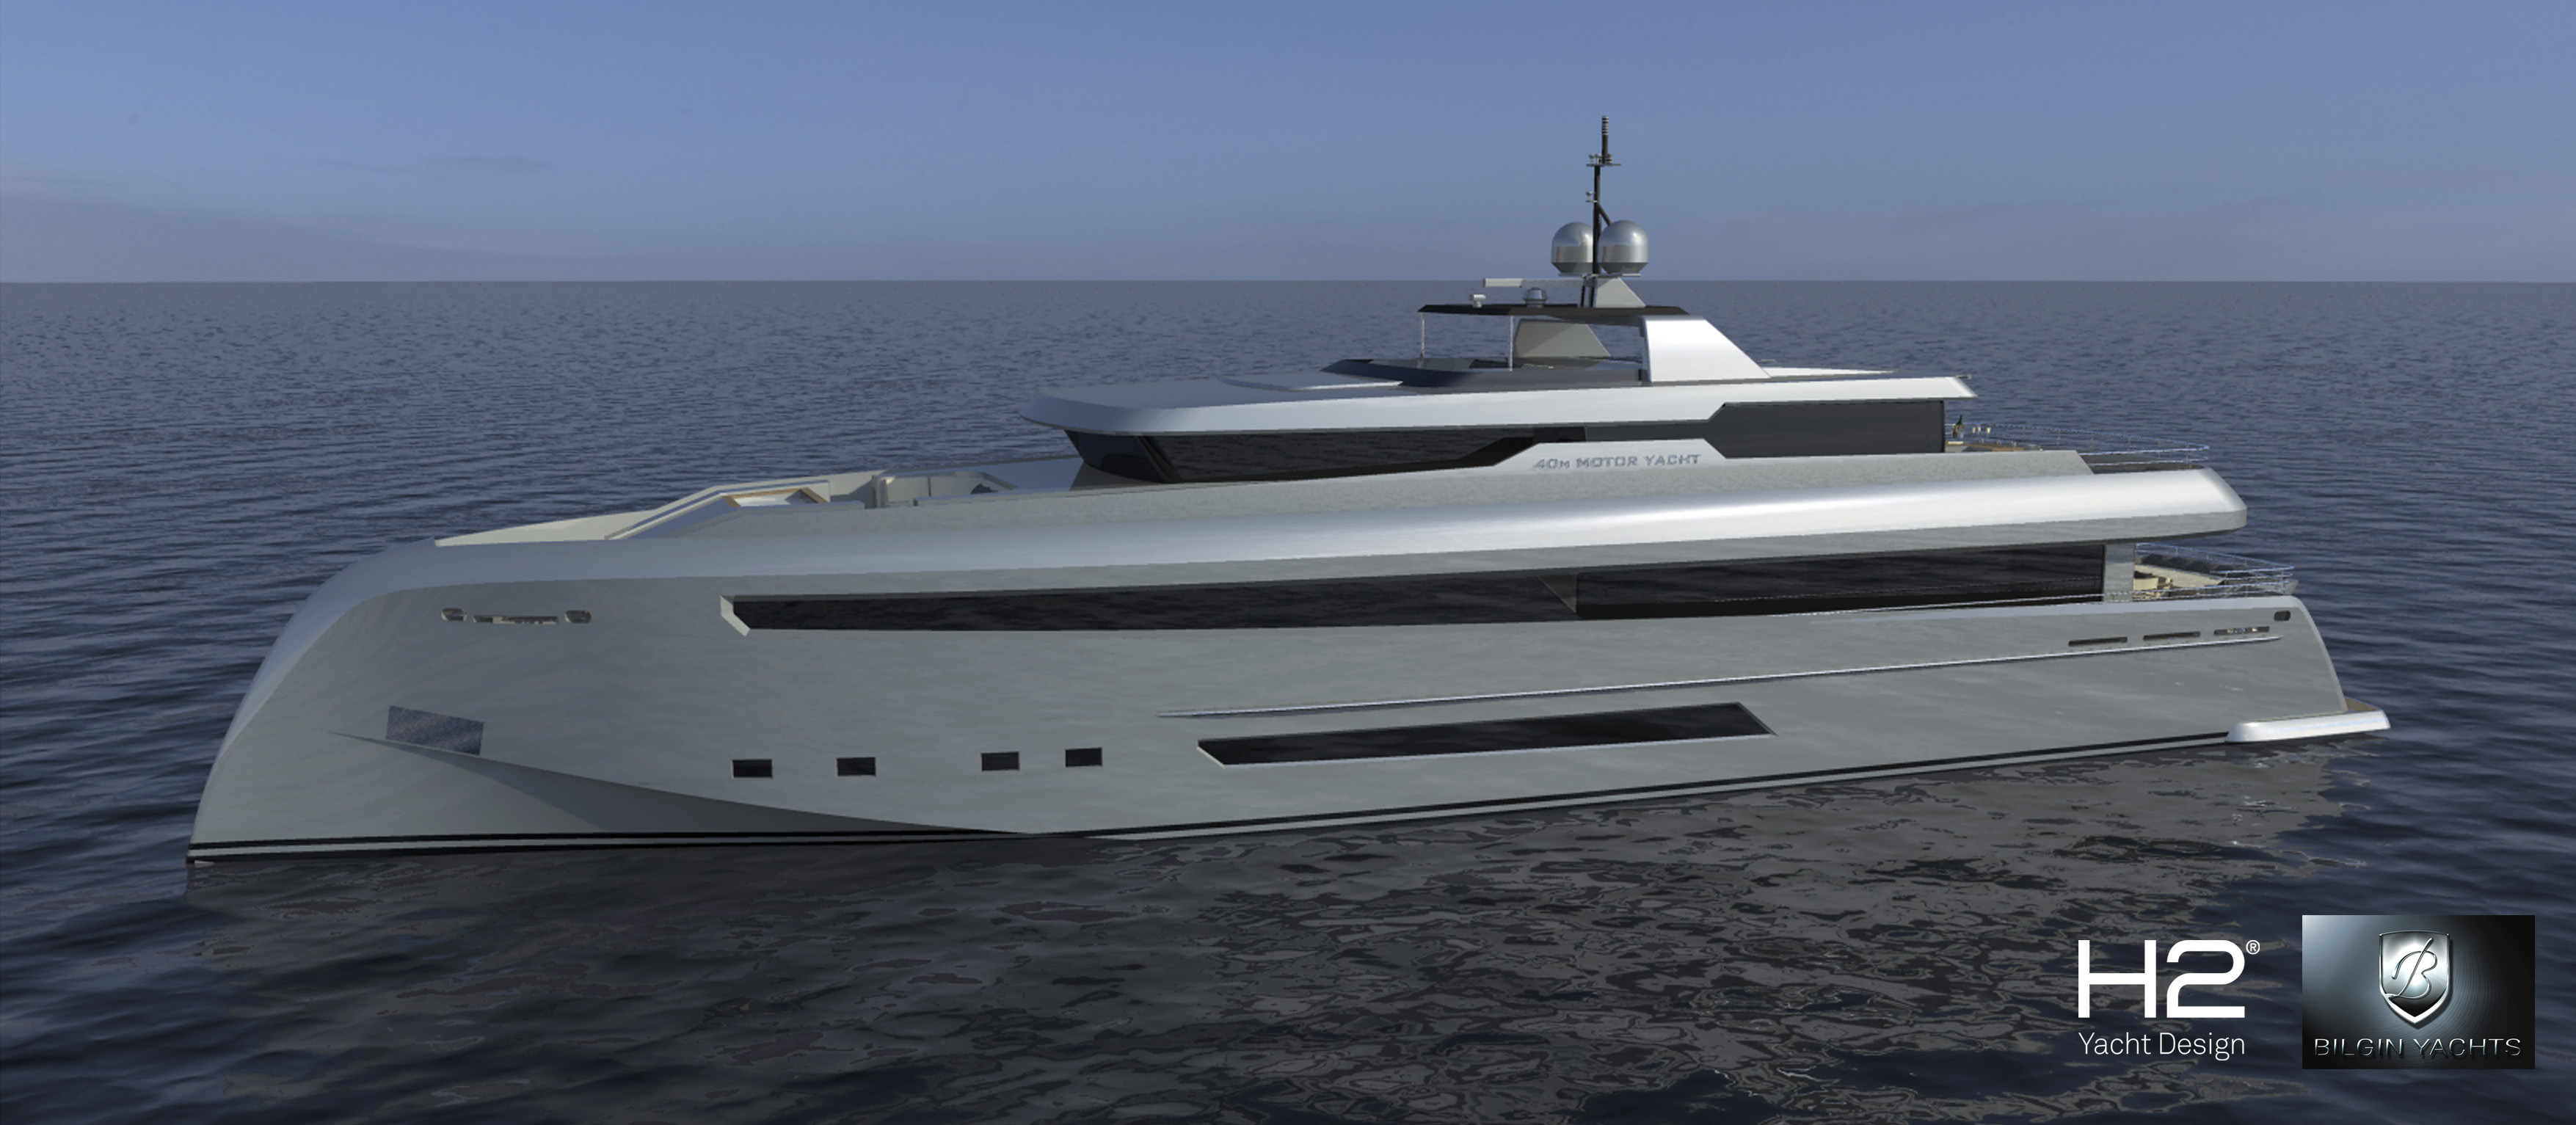 New Yacht Design